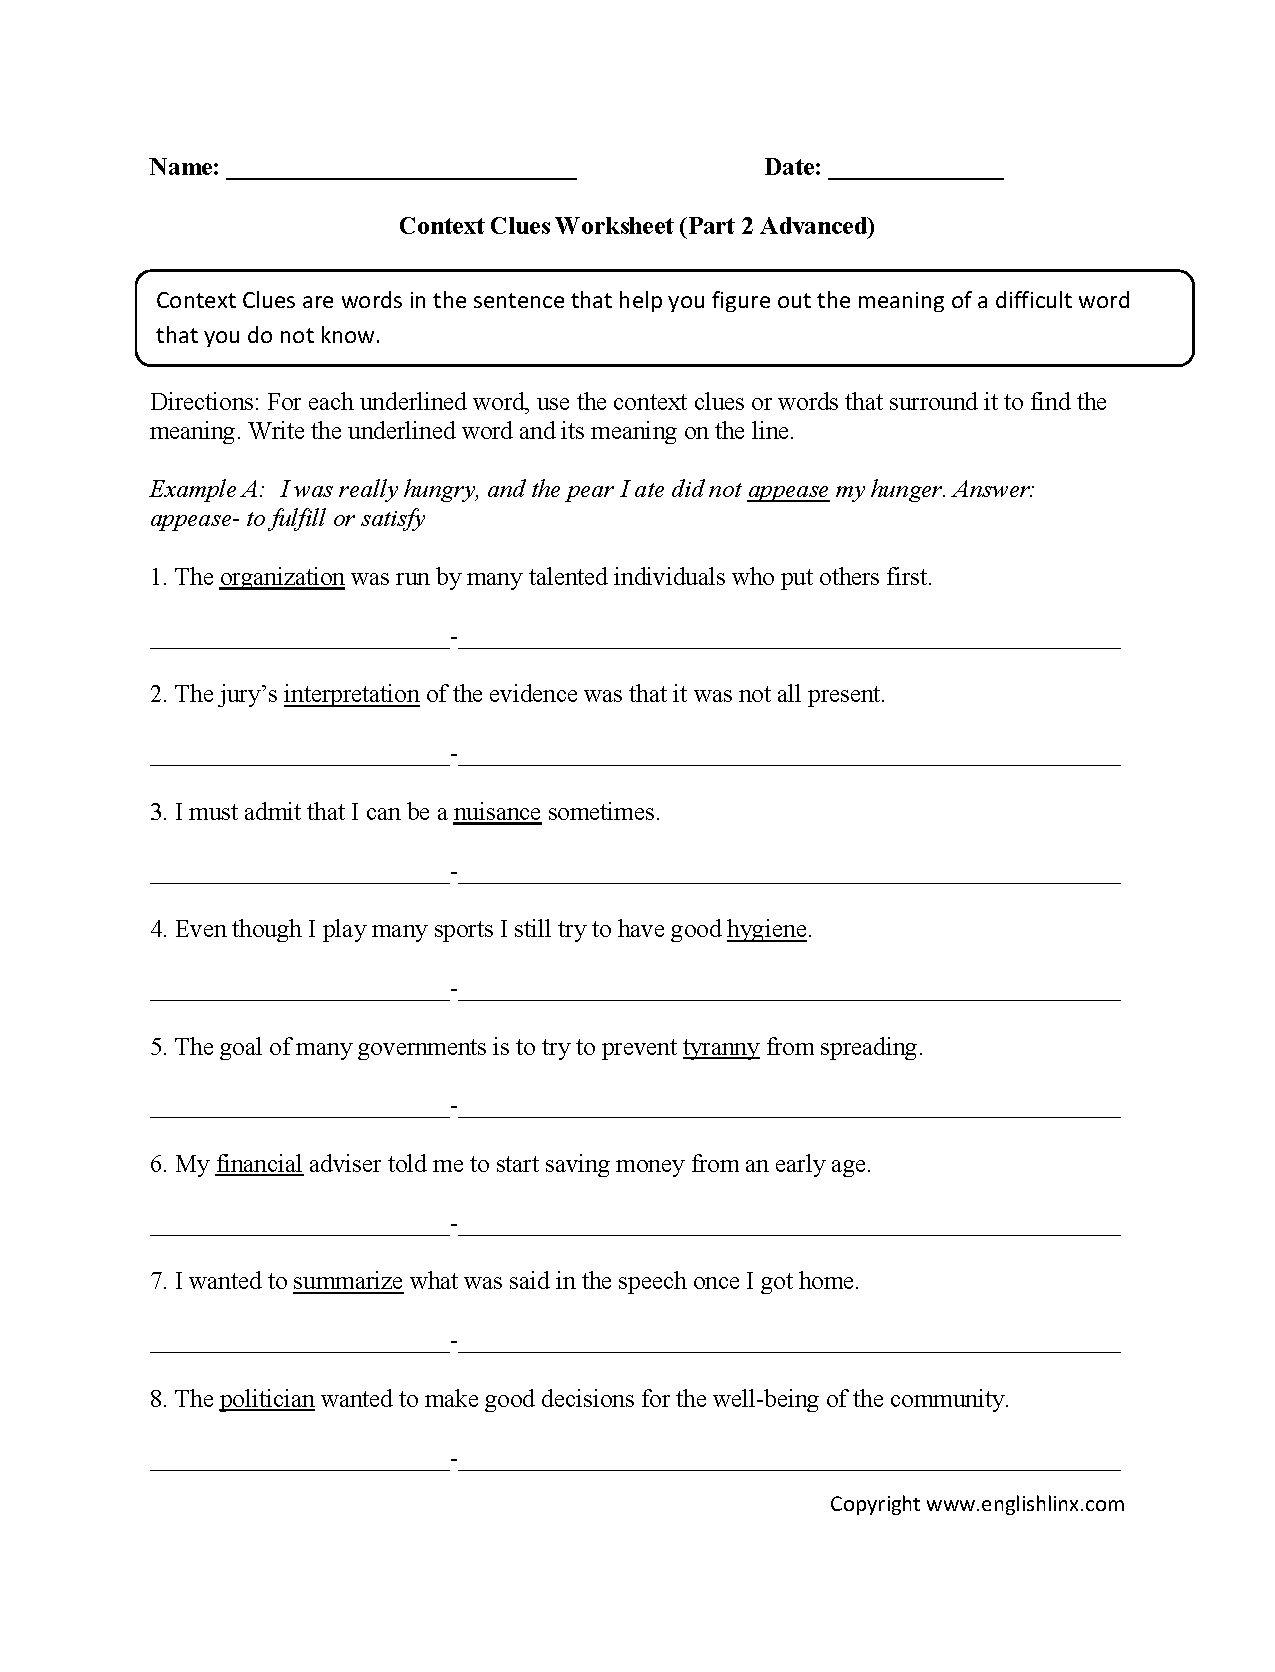 Context Clues Worksheets Part 2 Advanced